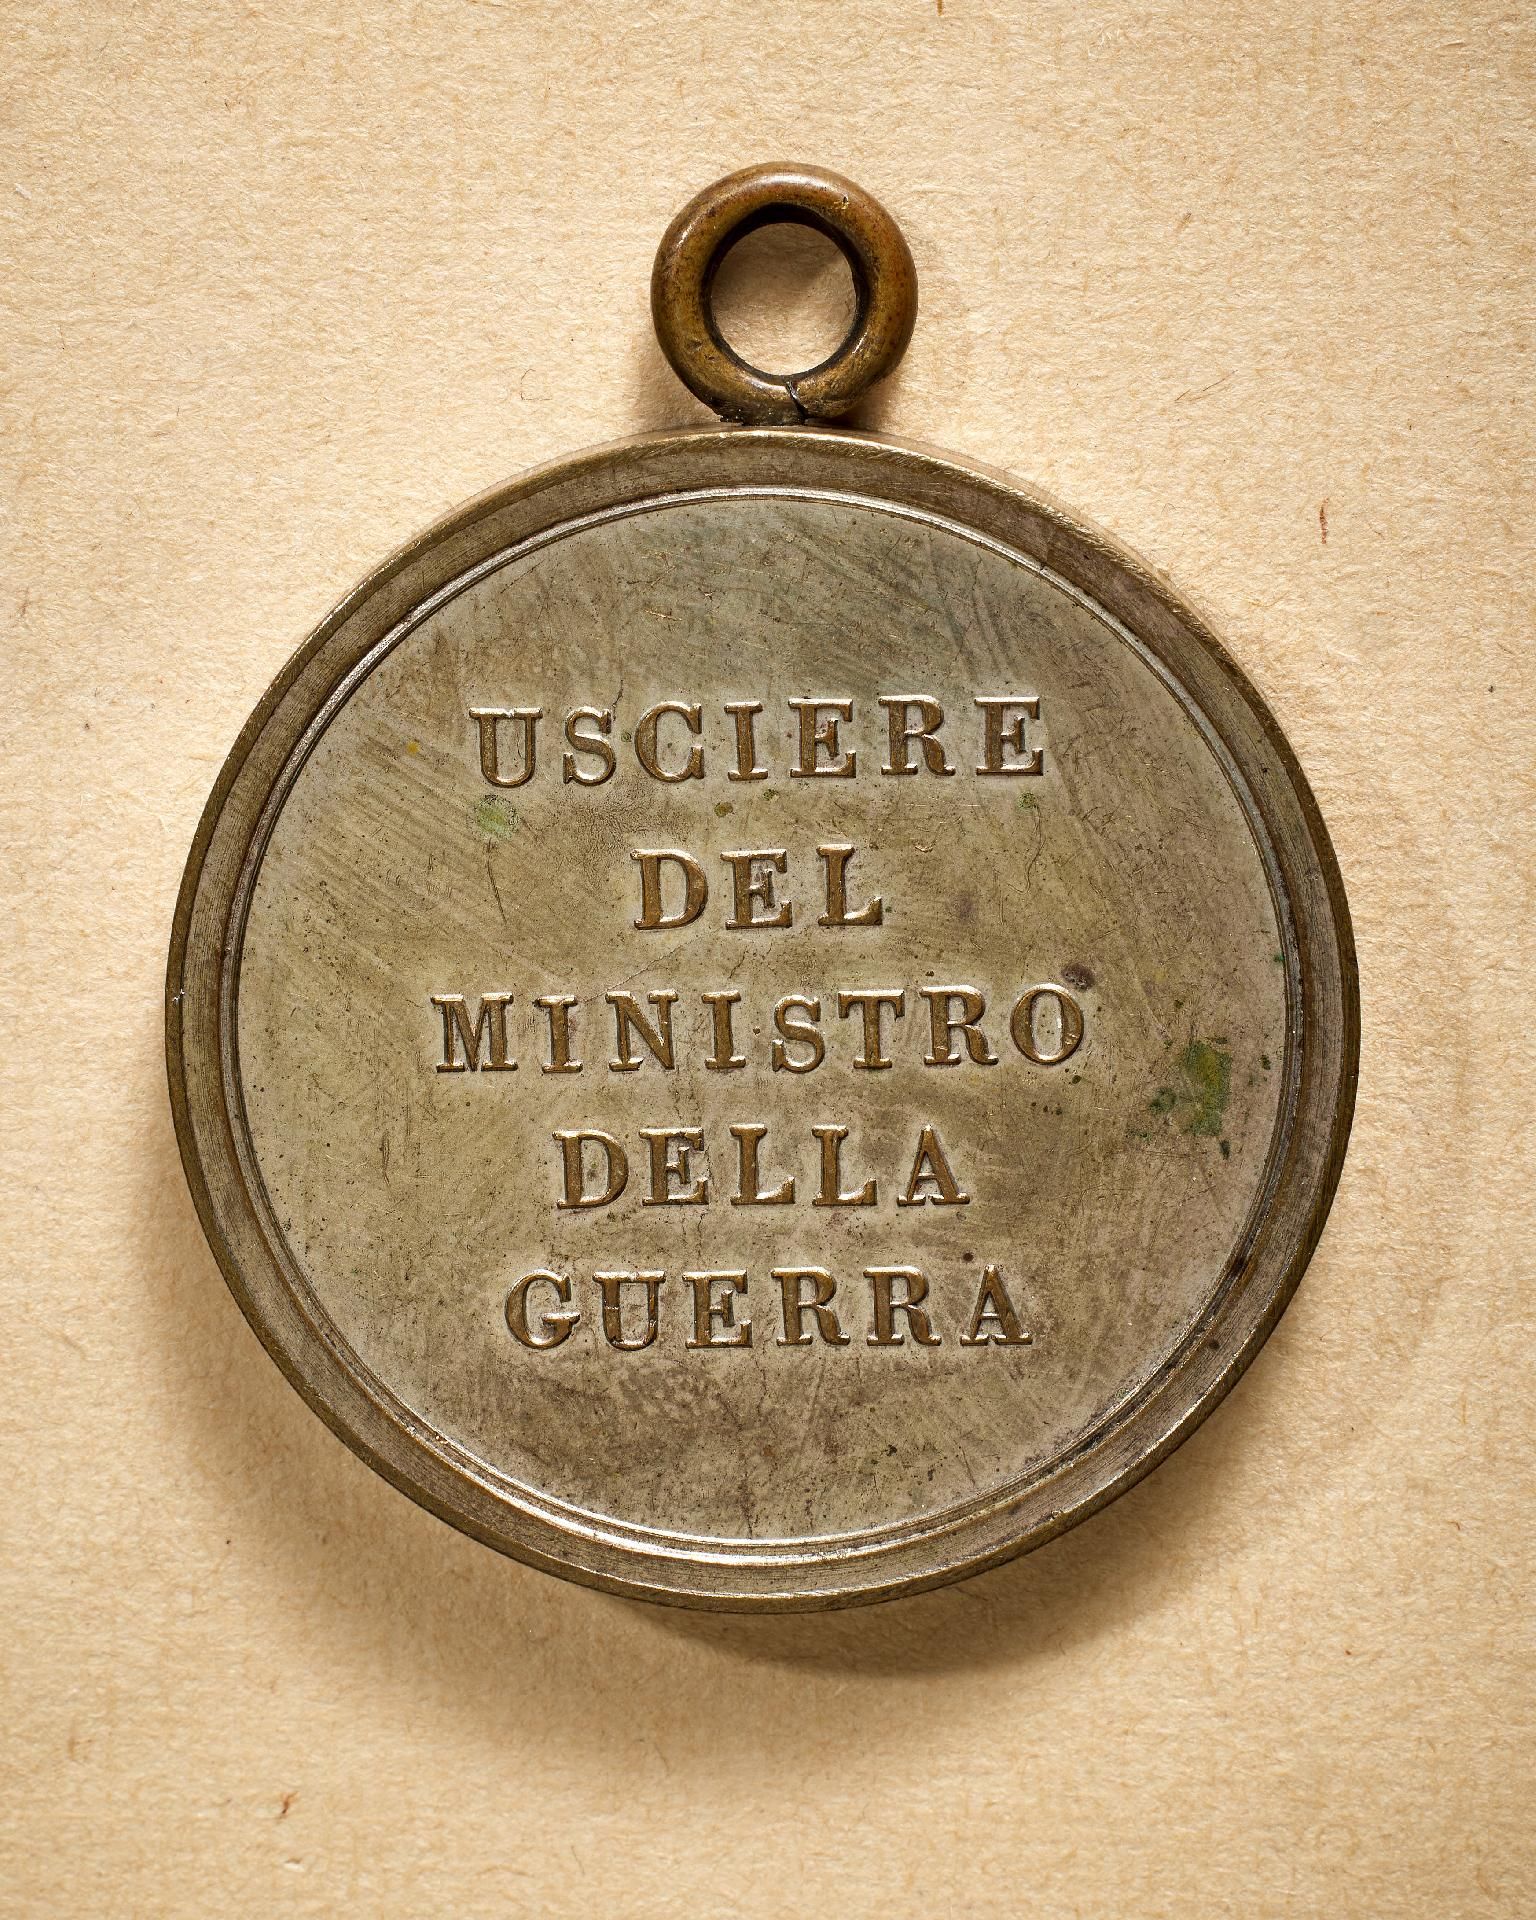 Italien : Königreich Italien (1805): Verdienstmedaille "Usciere del Ministro della Guerra" - Bild 2 aus 2